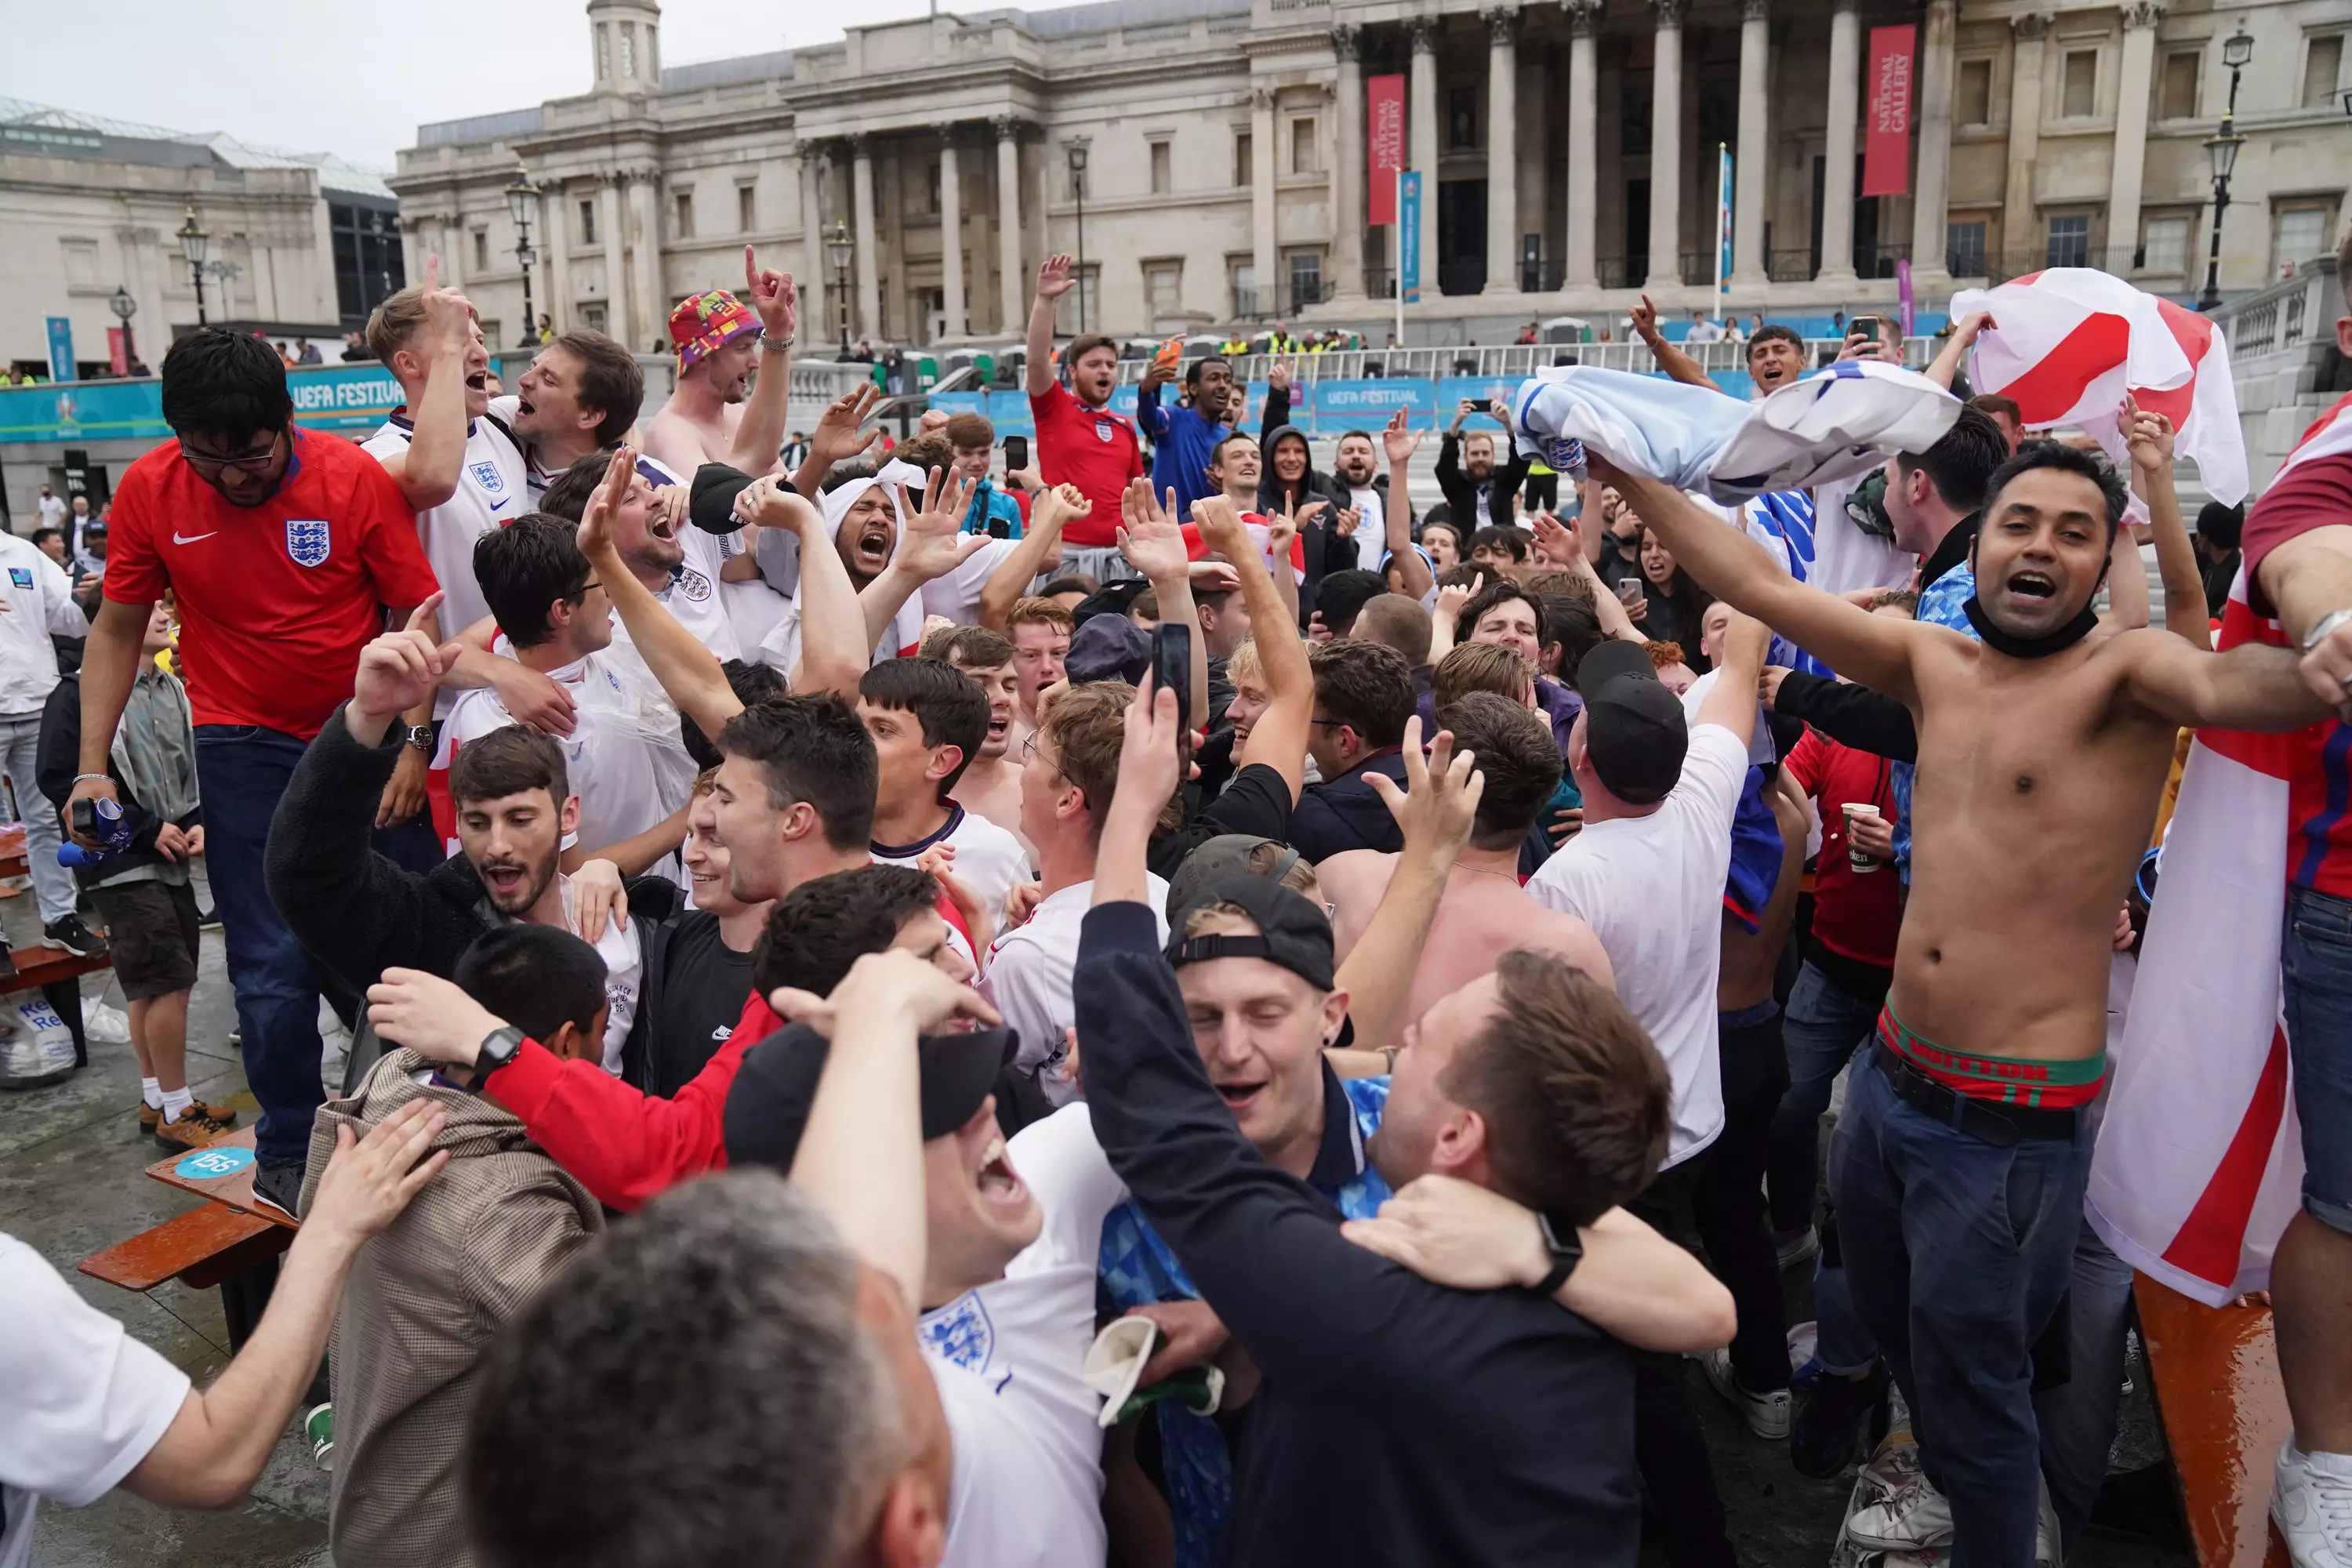 Fans celebrating at Trafalgar Square.